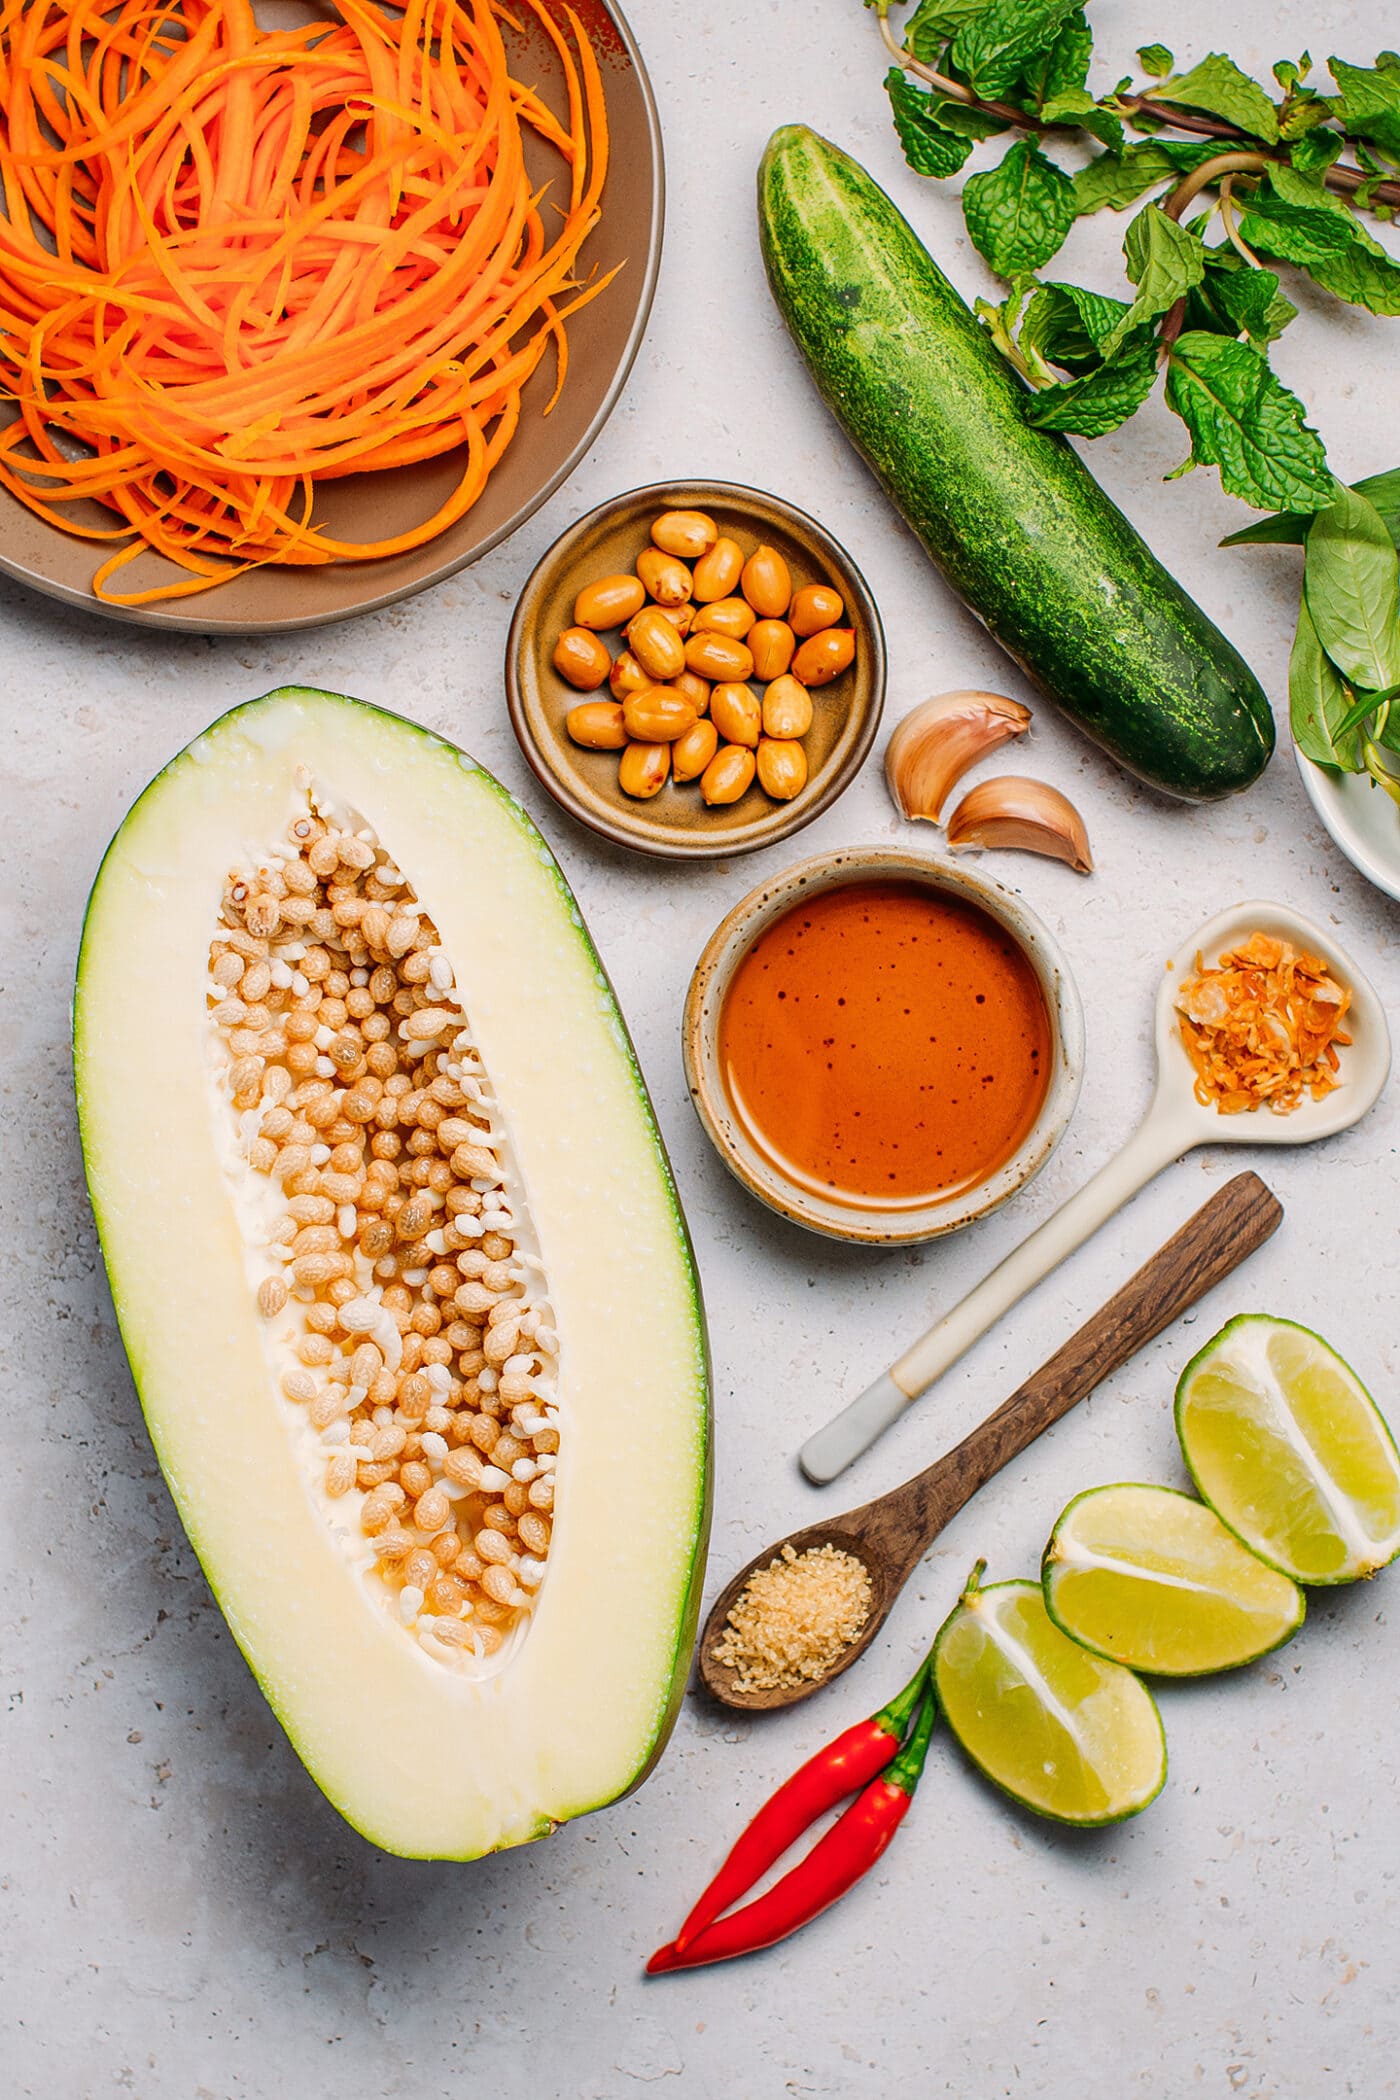 Ingredients like green papaya, cucumber, fish sauce, peanuts, and lime.